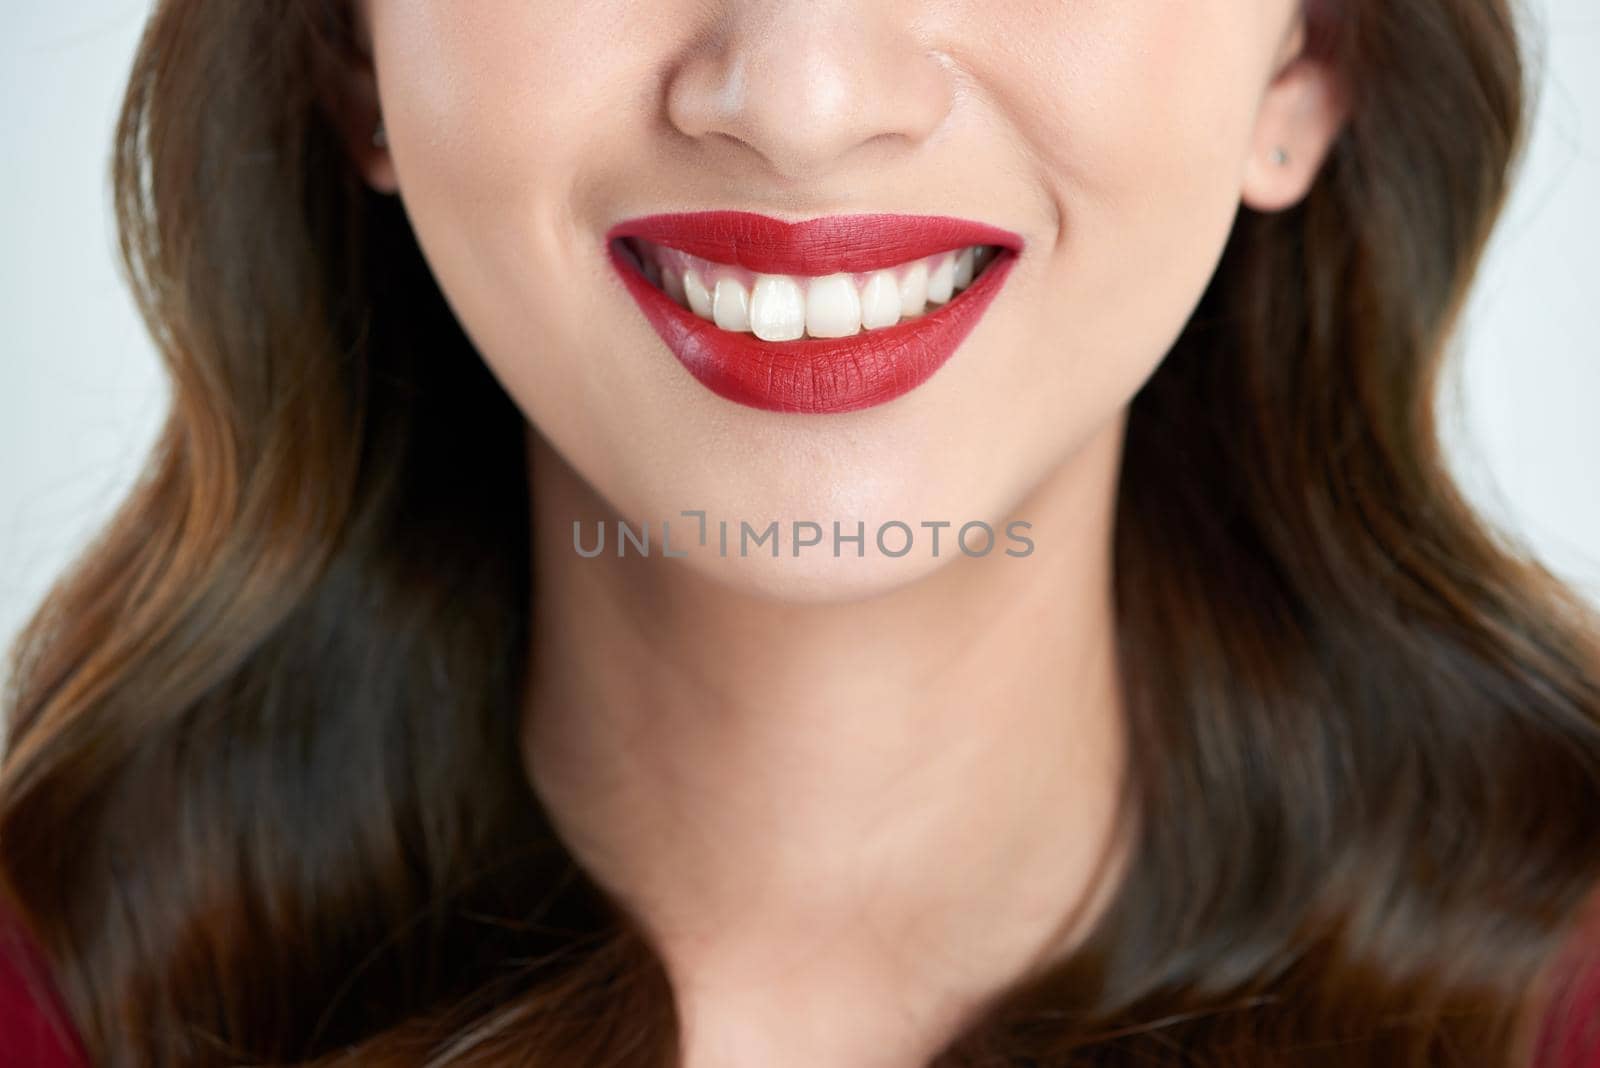 Female lips closeup. Beautiful smile of young fresh woman.